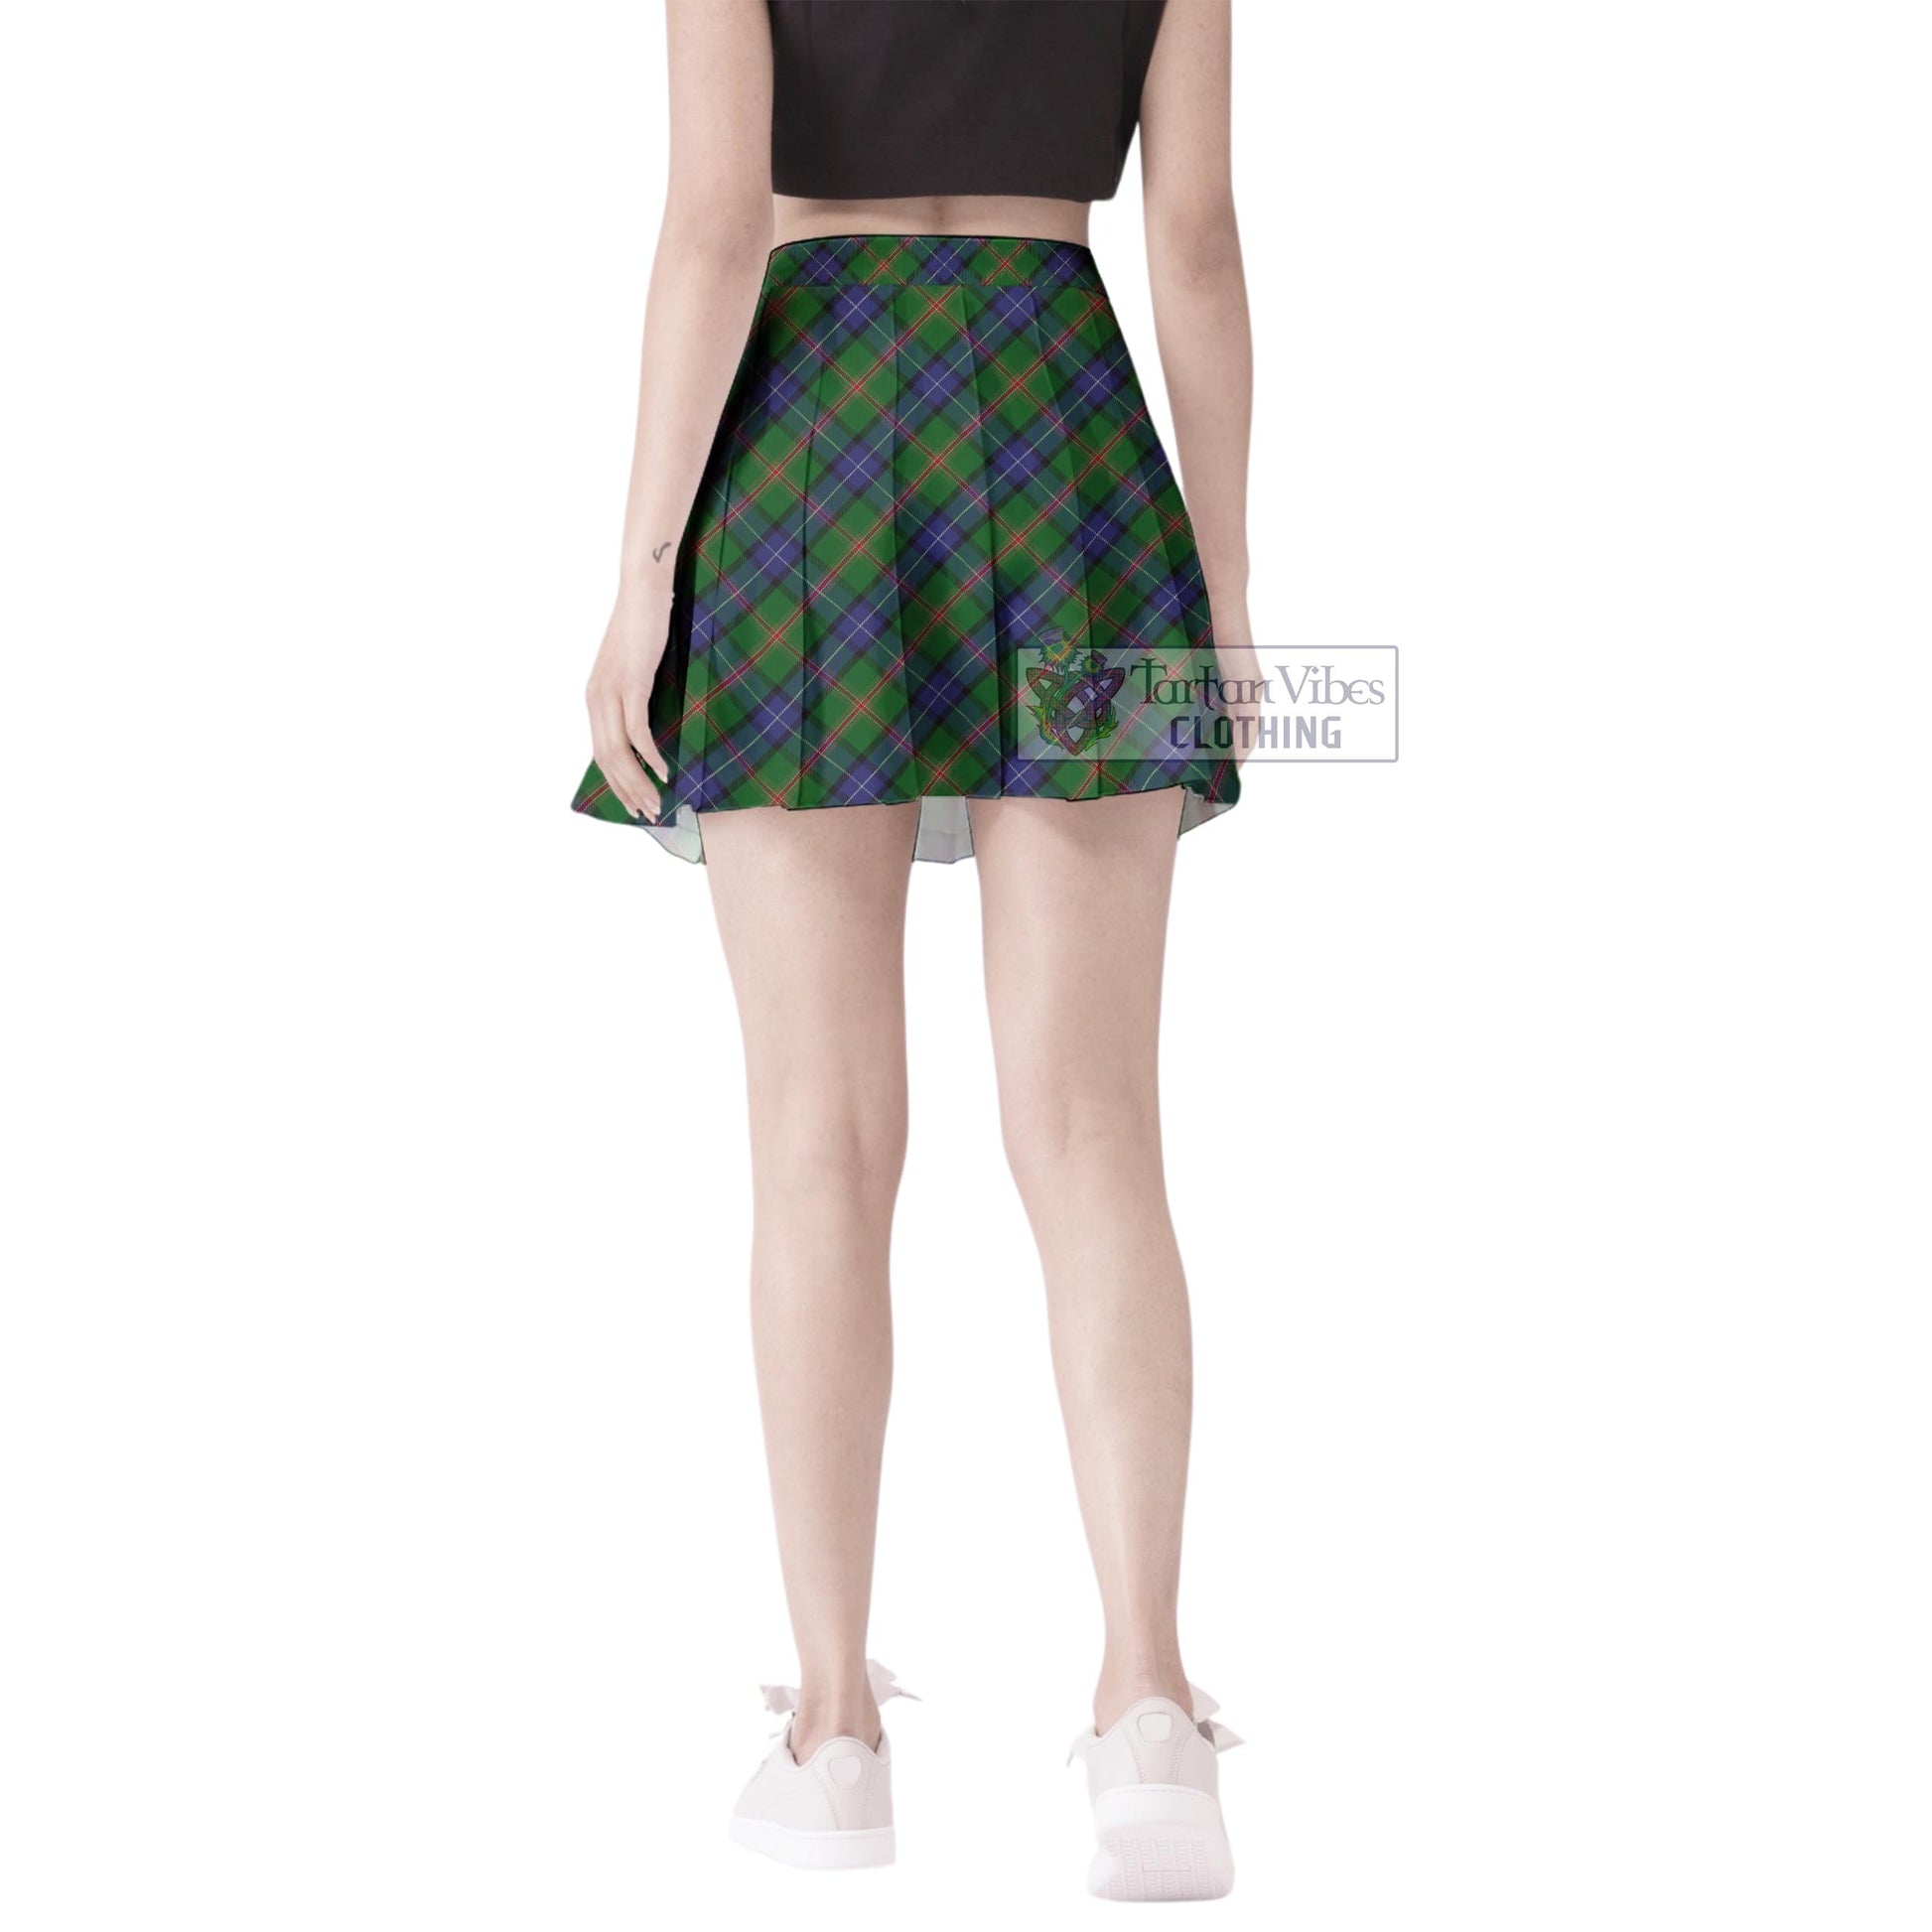 Tartan Vibes Clothing Jones Tartan Women's Plated Mini Skirt